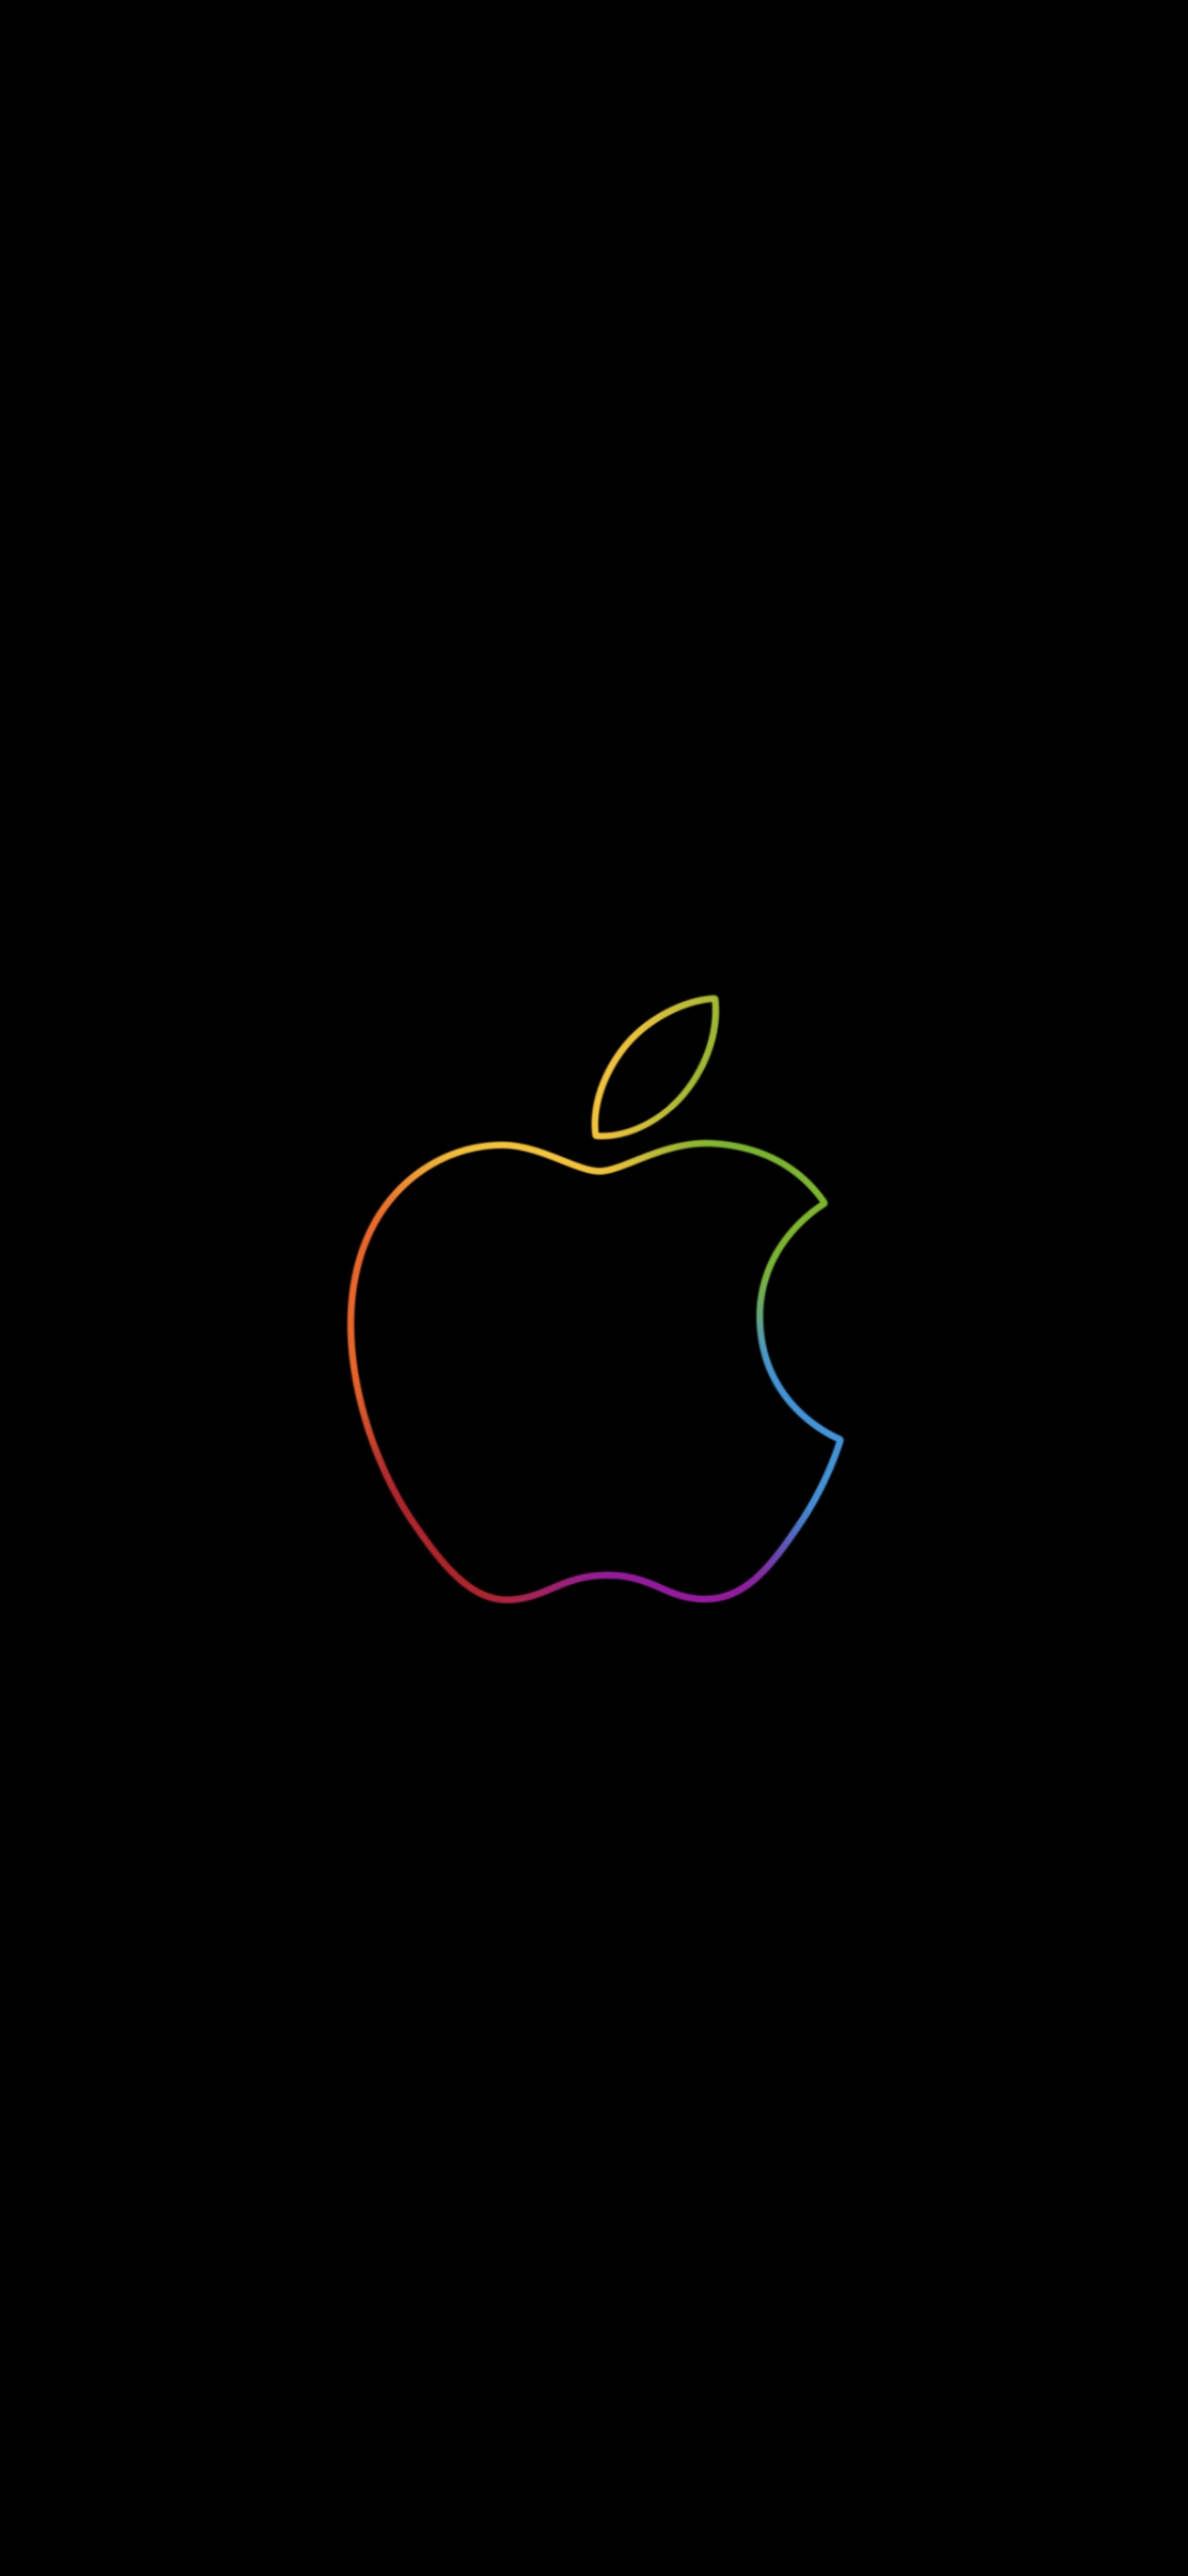 Multicolored apple logo | Apple iphone wallpaper hd, Iphone wallpaper  video, Apple logo wallpaper iphone